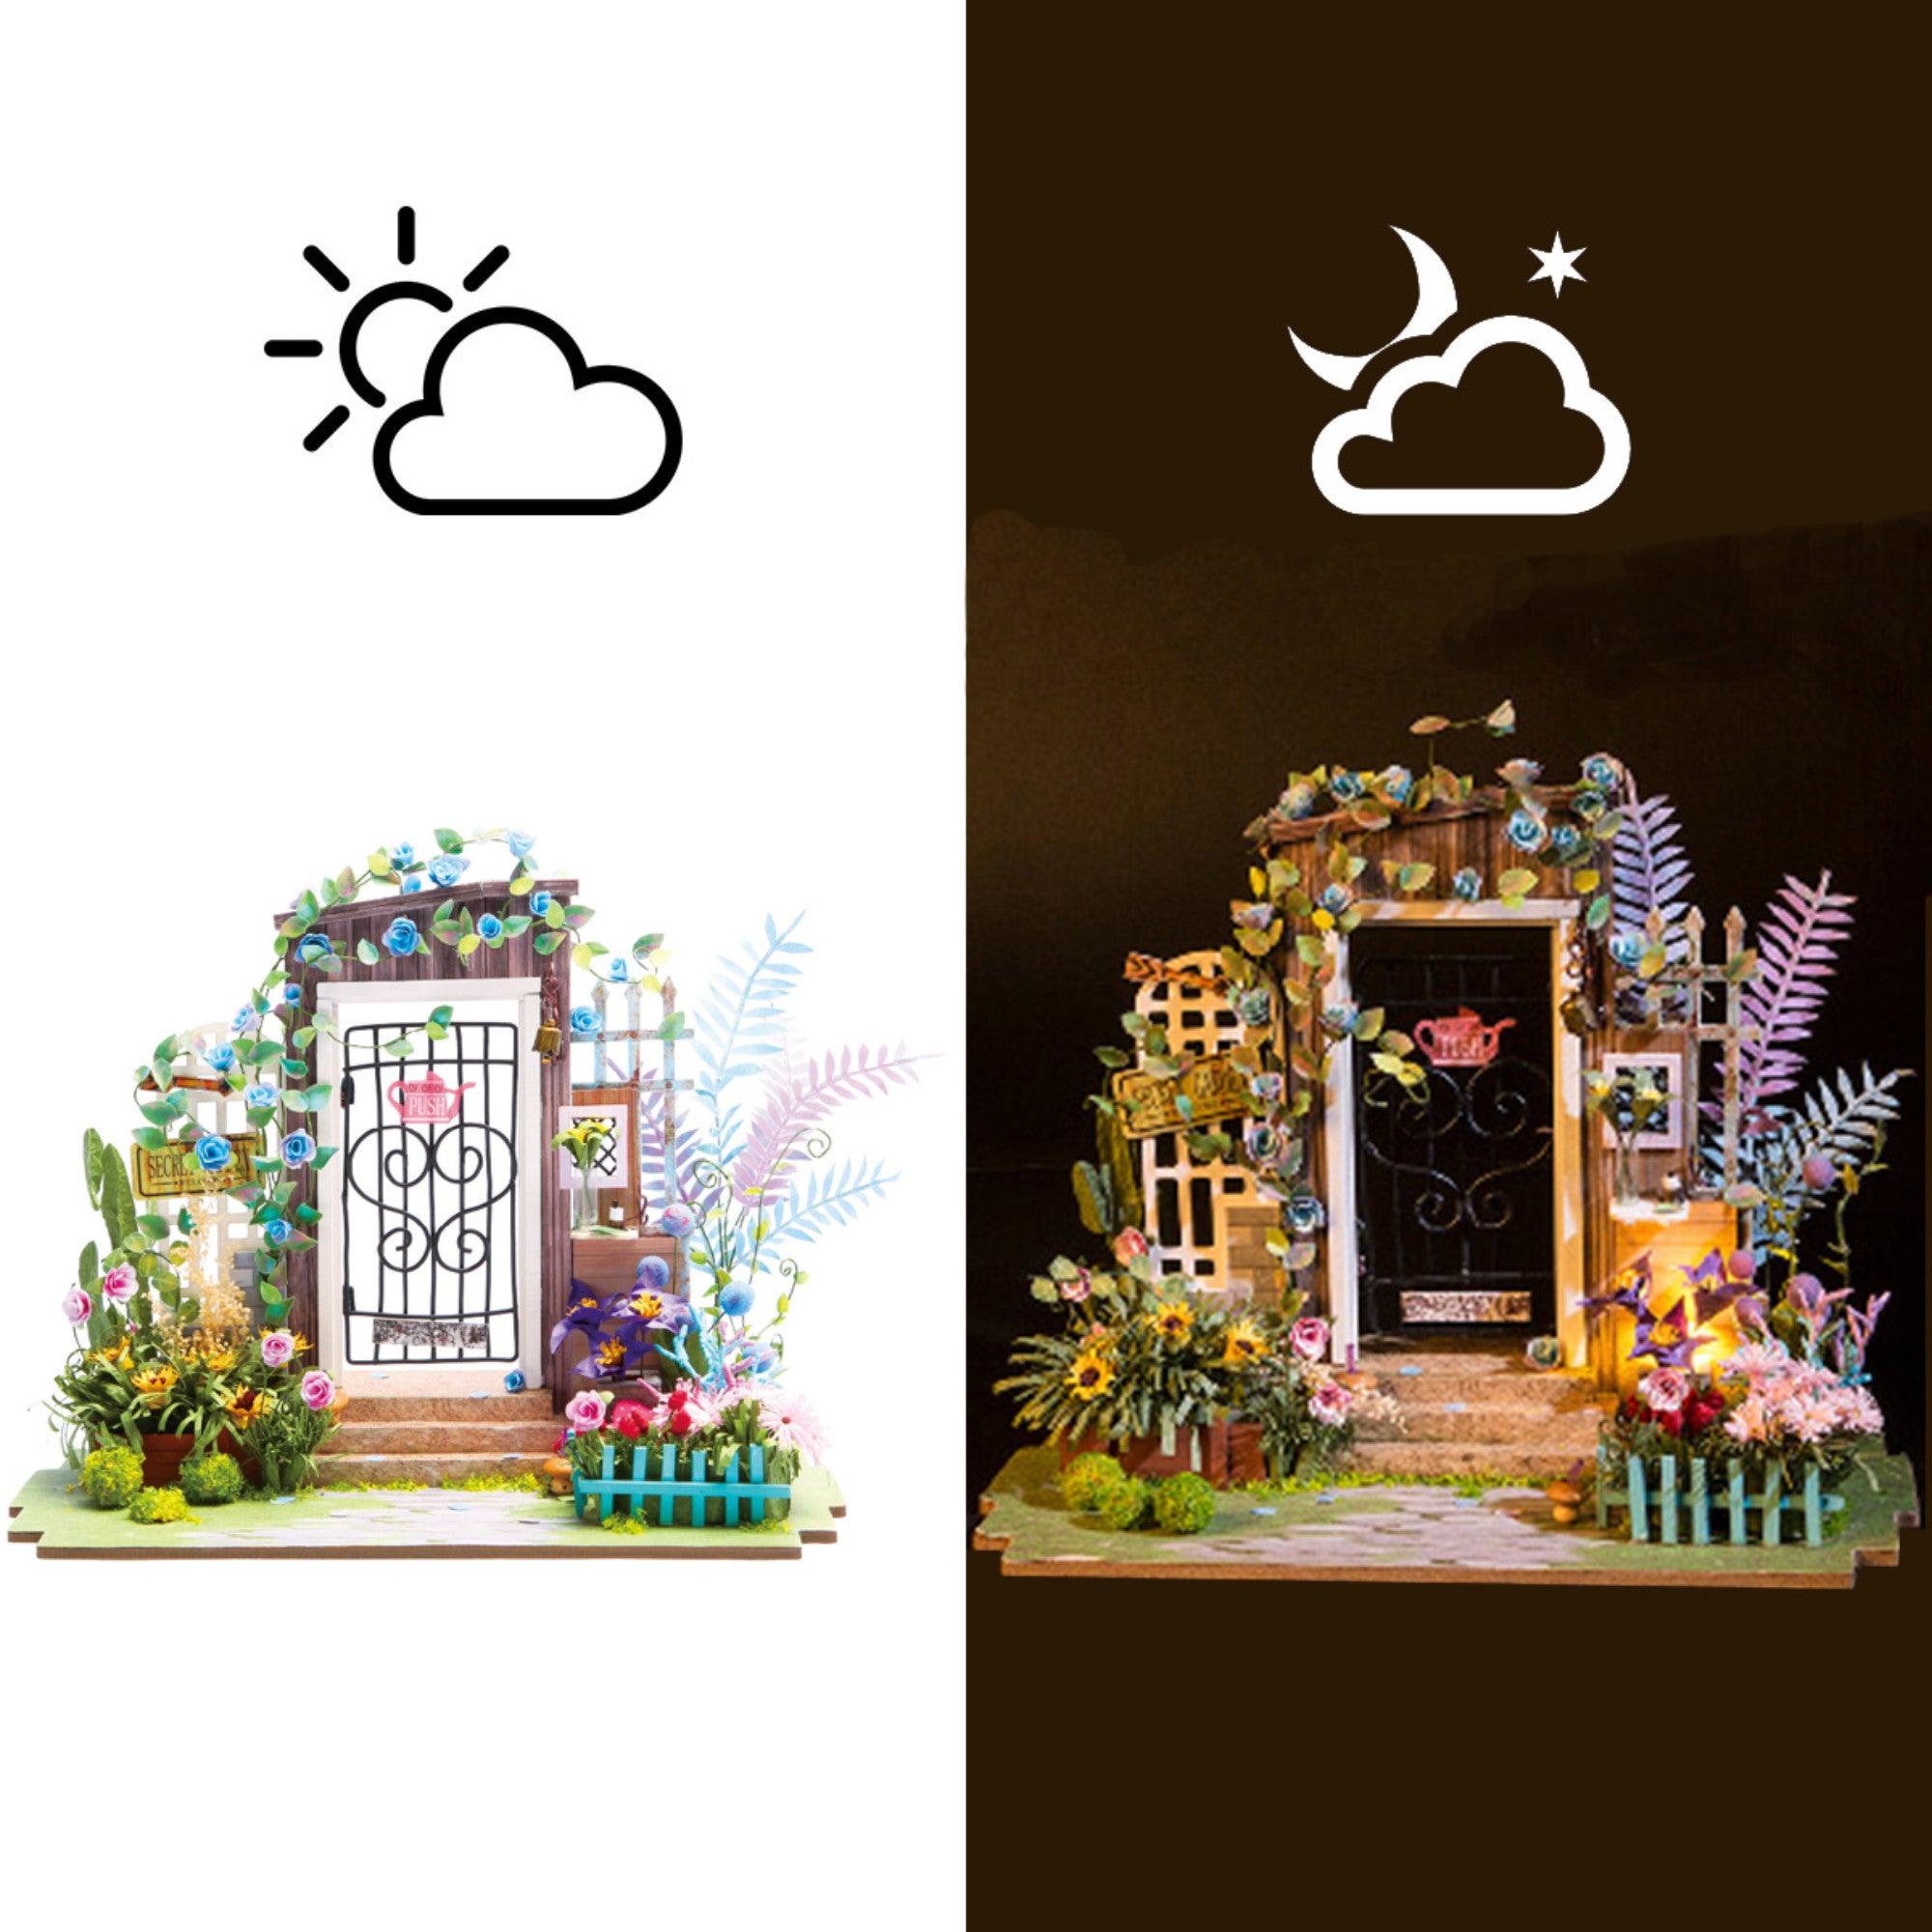 DIY Miniature Dollhouse Kit | Garden Entrance